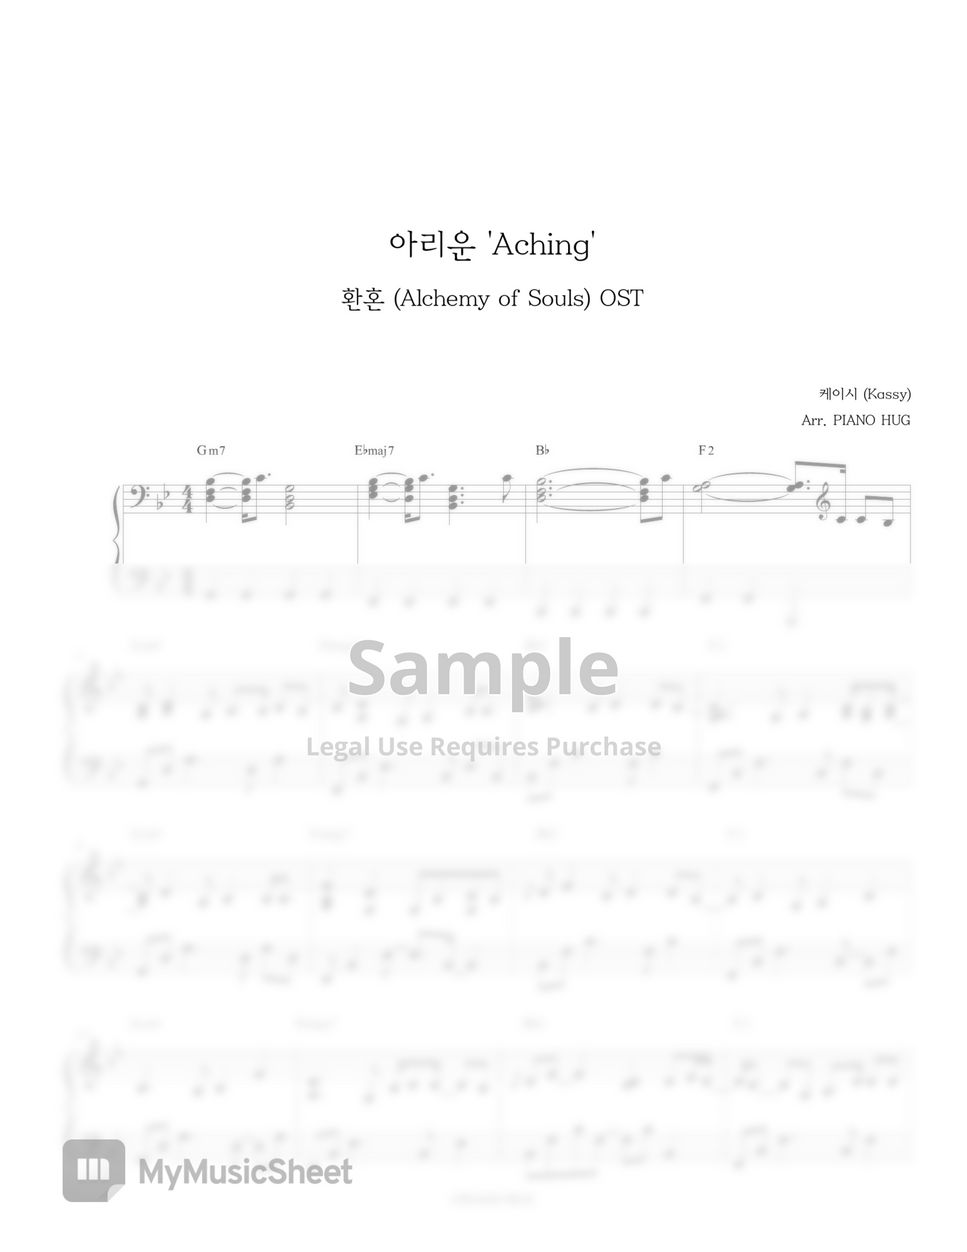 Alchemy of Souls (환혼) OST - Kassy (케이시) - Aching (아리운) by Piano Hug